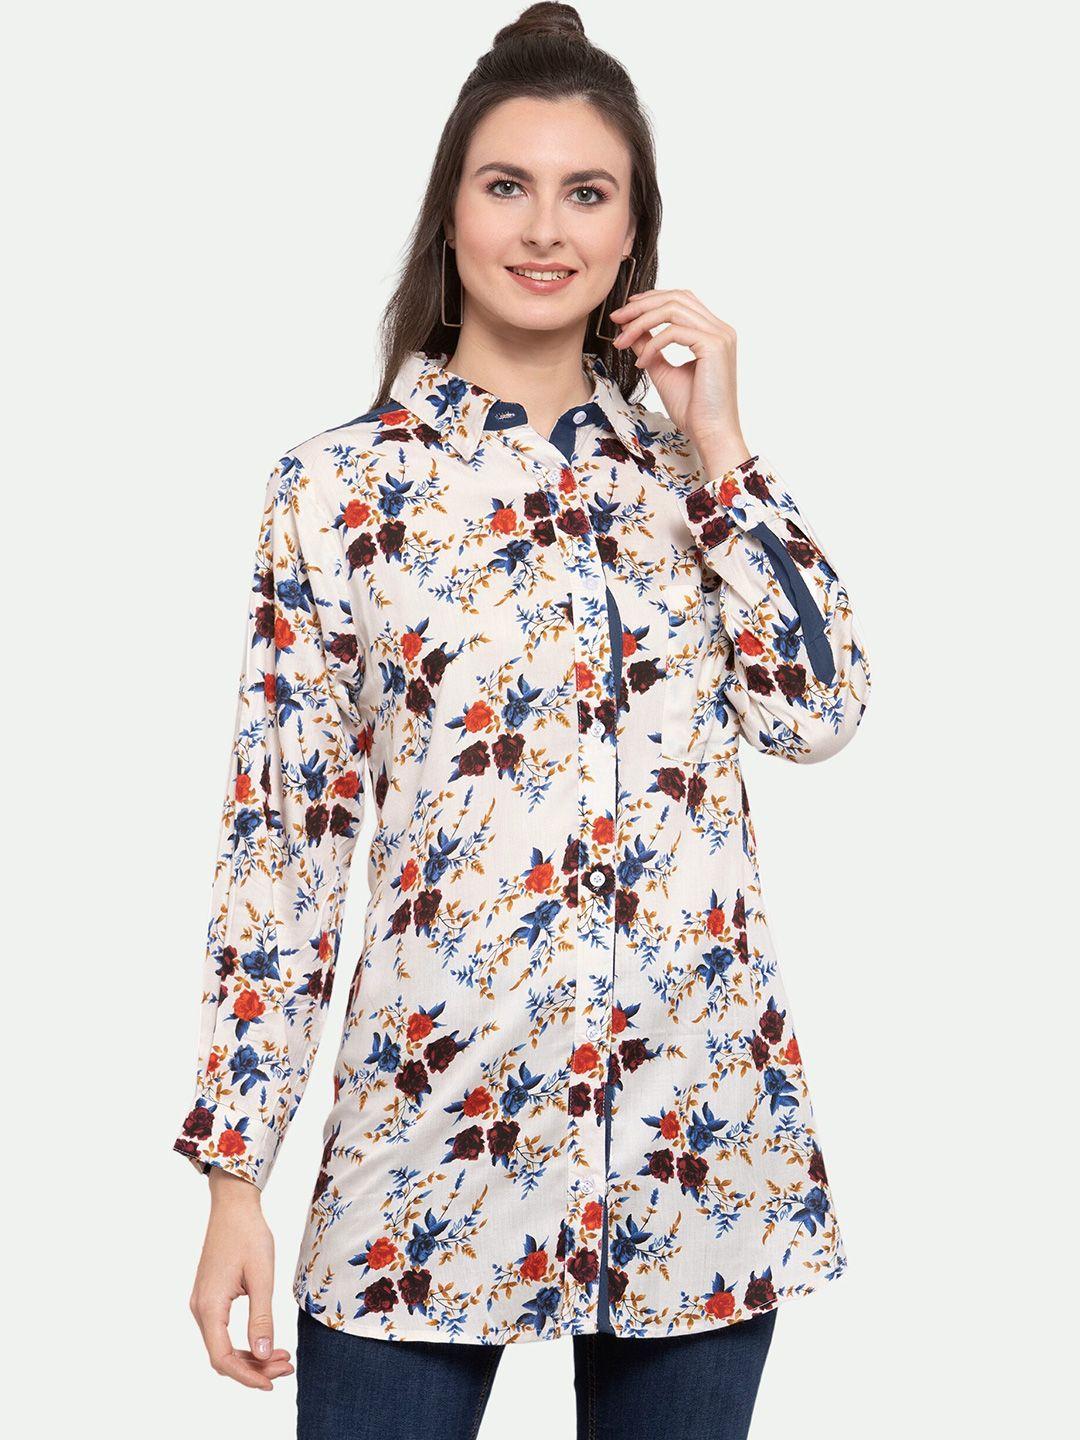 patrorna women multicoloured comfort floral printed casual shirt